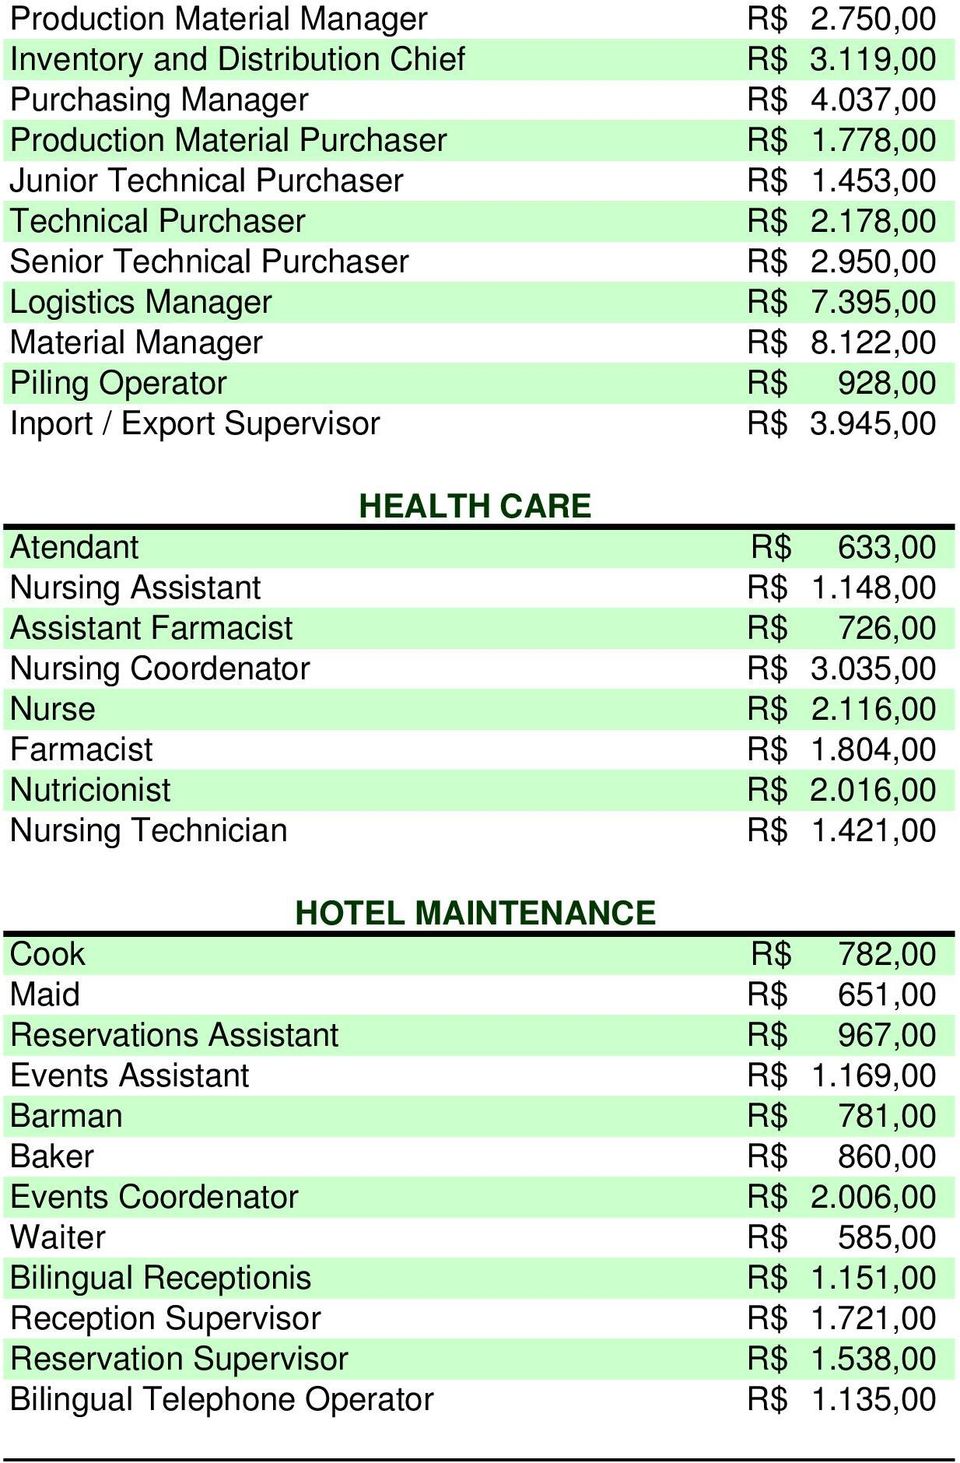 945,00 HEALTH CARE Atendant R$ 633,00 Nursing Assistant R$ 1.148,00 Assistant Farmacist R$ 726,00 Nursing Coordenator R$ 3.035,00 Nurse R$ 2.116,00 Farmacist R$ 1.804,00 Nutricionist R$ 2.